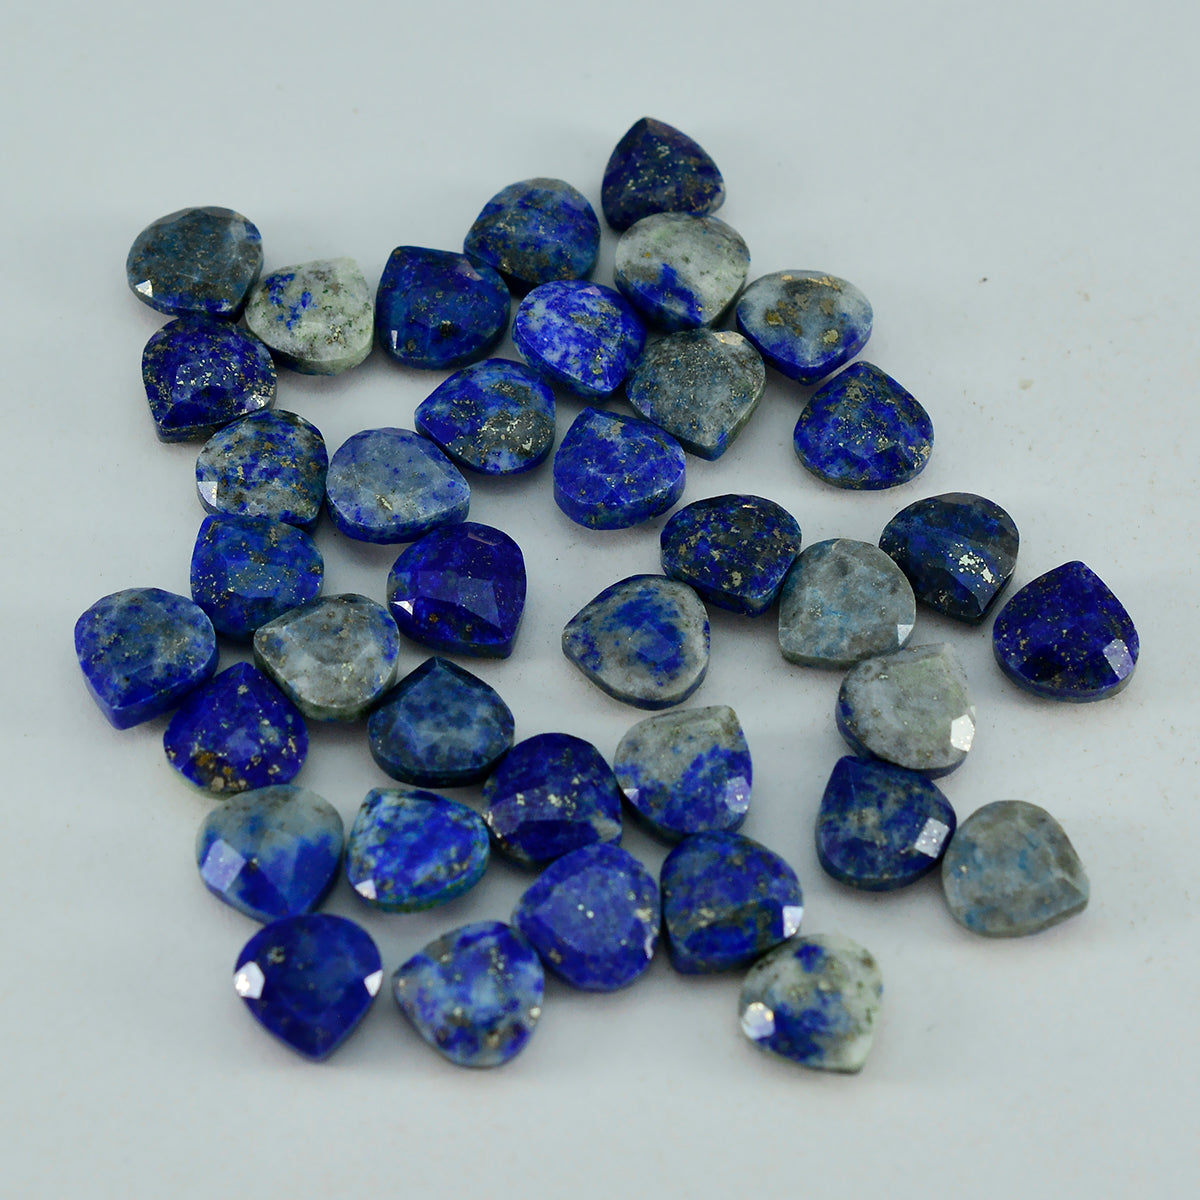 Riyogems 1PC Natural Blue Lapis Lazuli Faceted 12x12 mm Heart Shape awesome Quality Stone